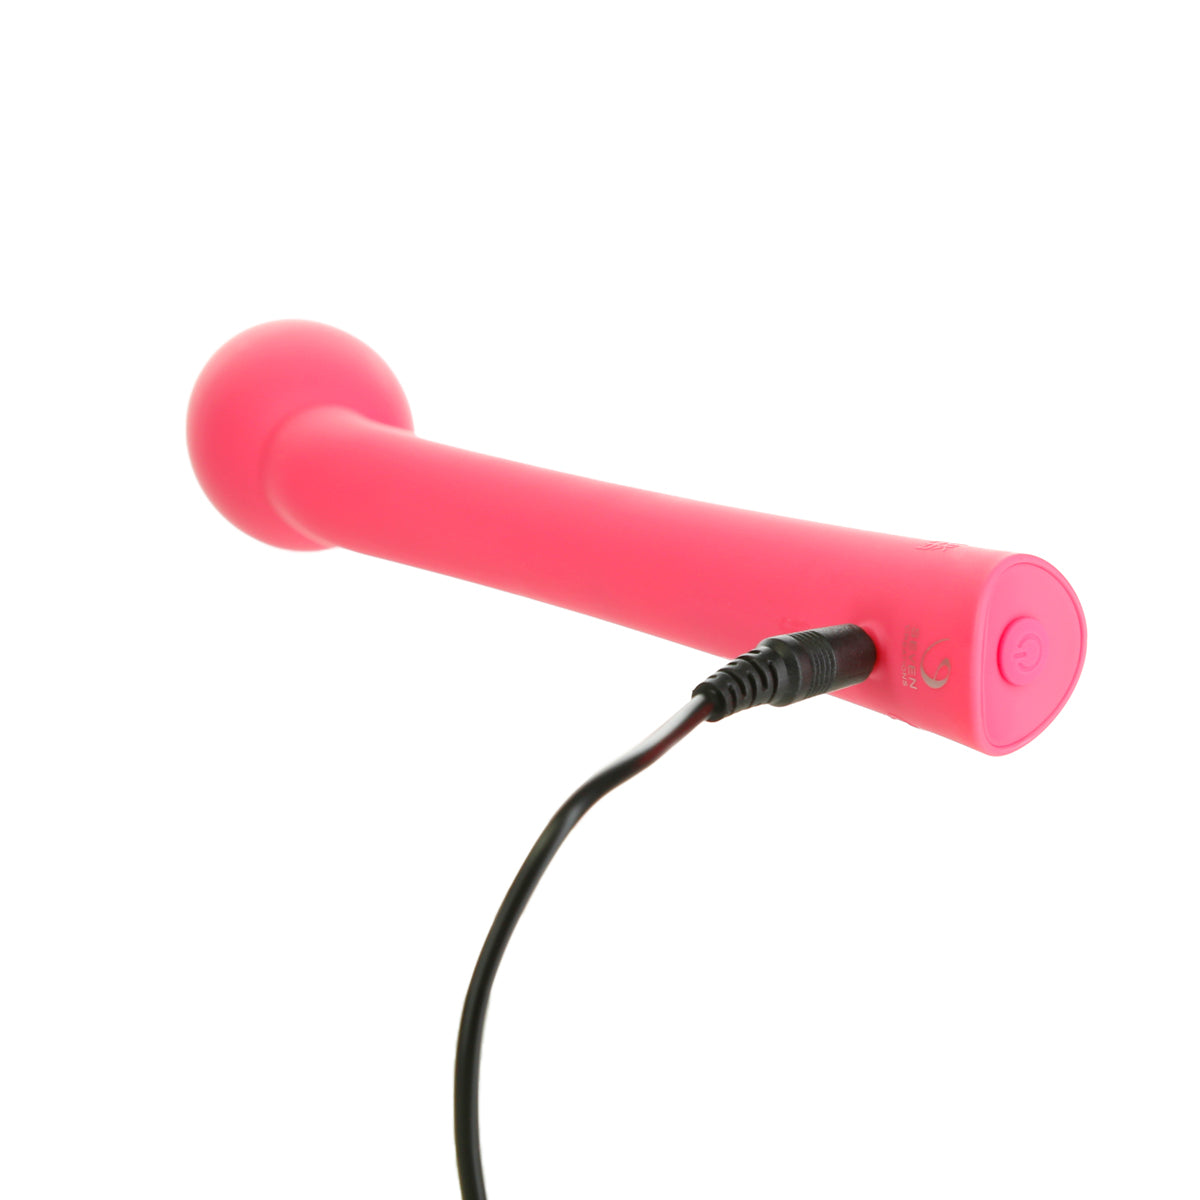 Seven Creations – Hip G - Rechargeable G-Spot Vibrator - Pink